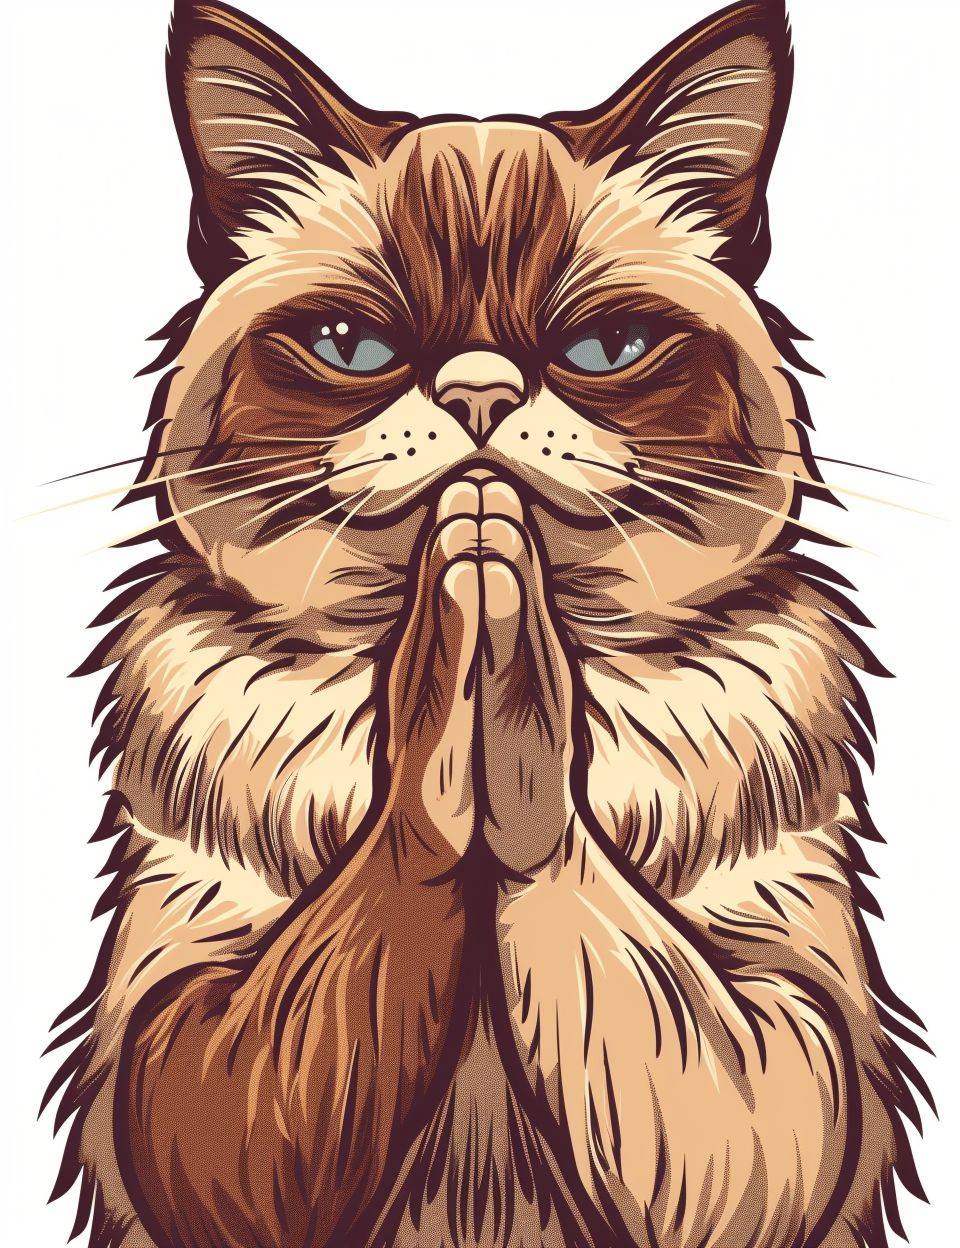 A grumpy cat with an insidious look, praying, plain transparent background, comic style